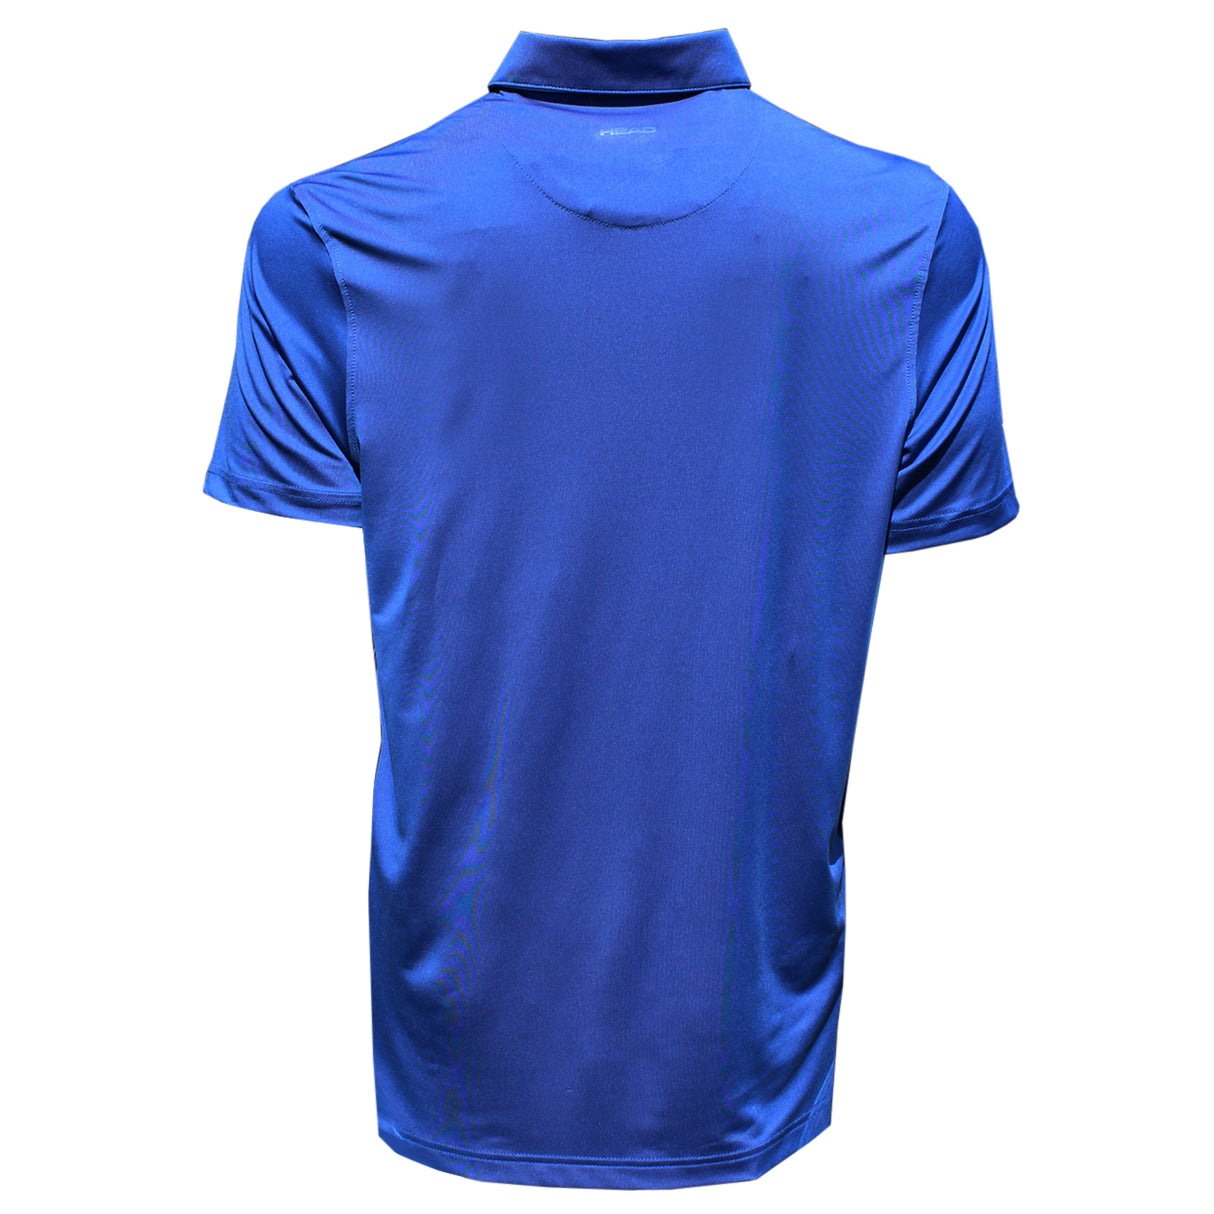 Head Men's Solid Performance Polo Golf Shirt